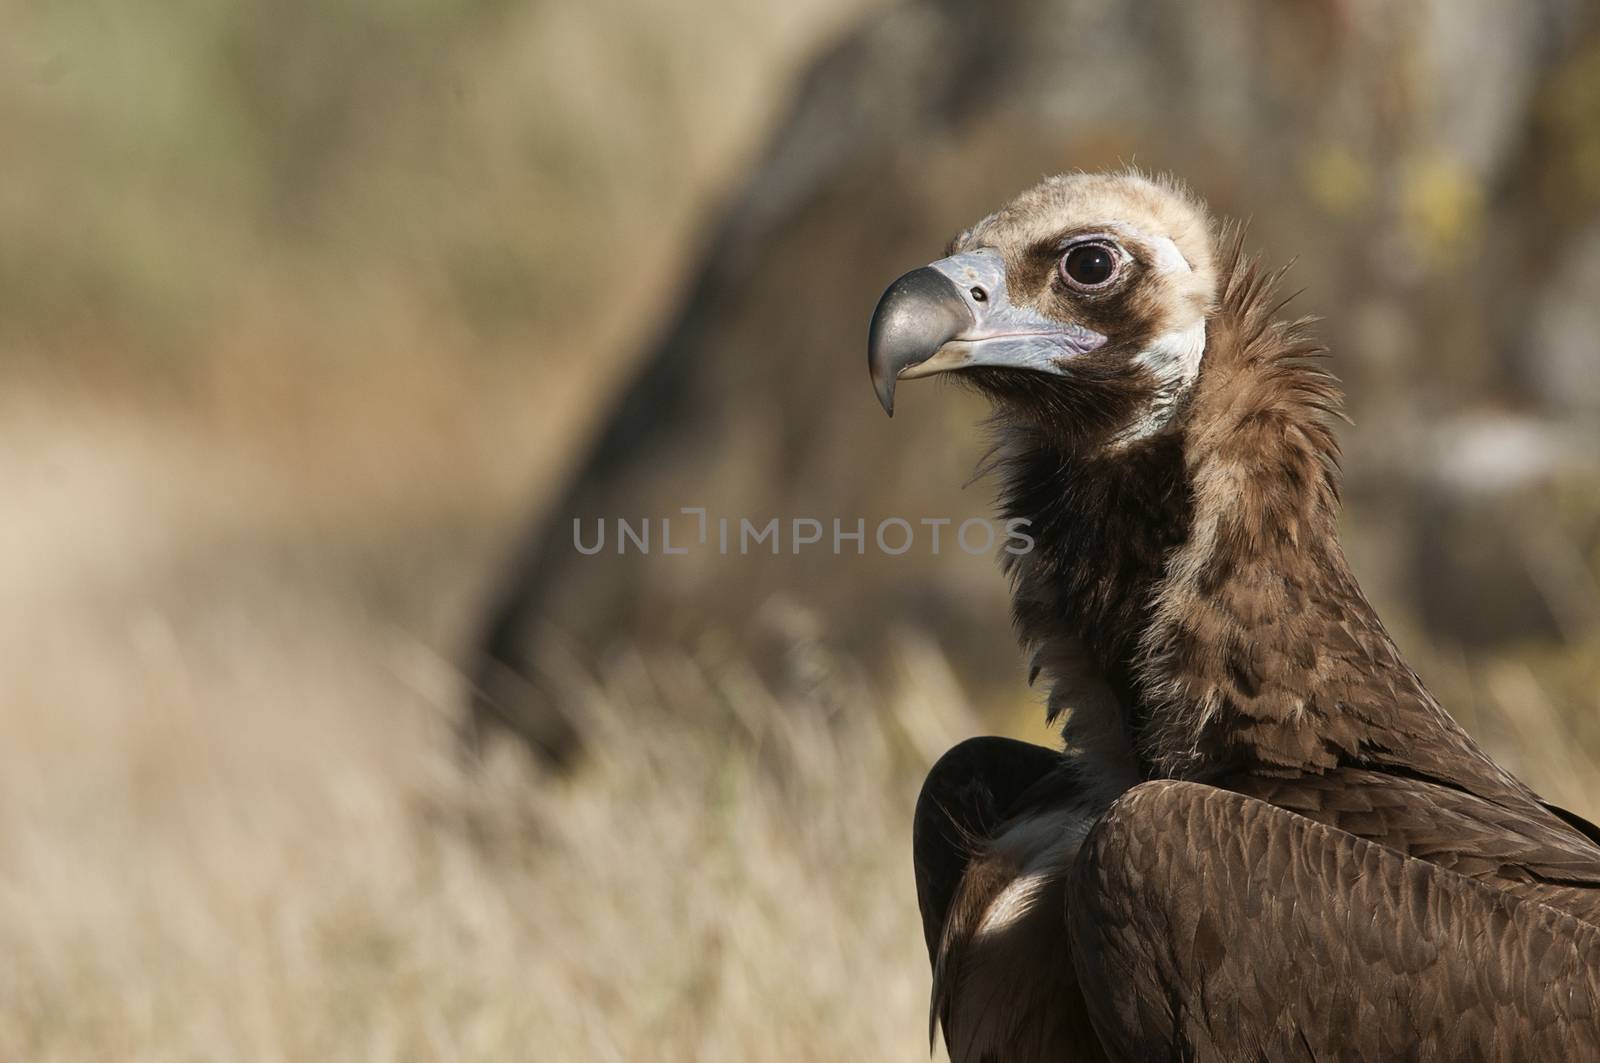 Cinereous (Eurasian Black) Vulture (Aegypius monachus), Head Portrait of Vulture